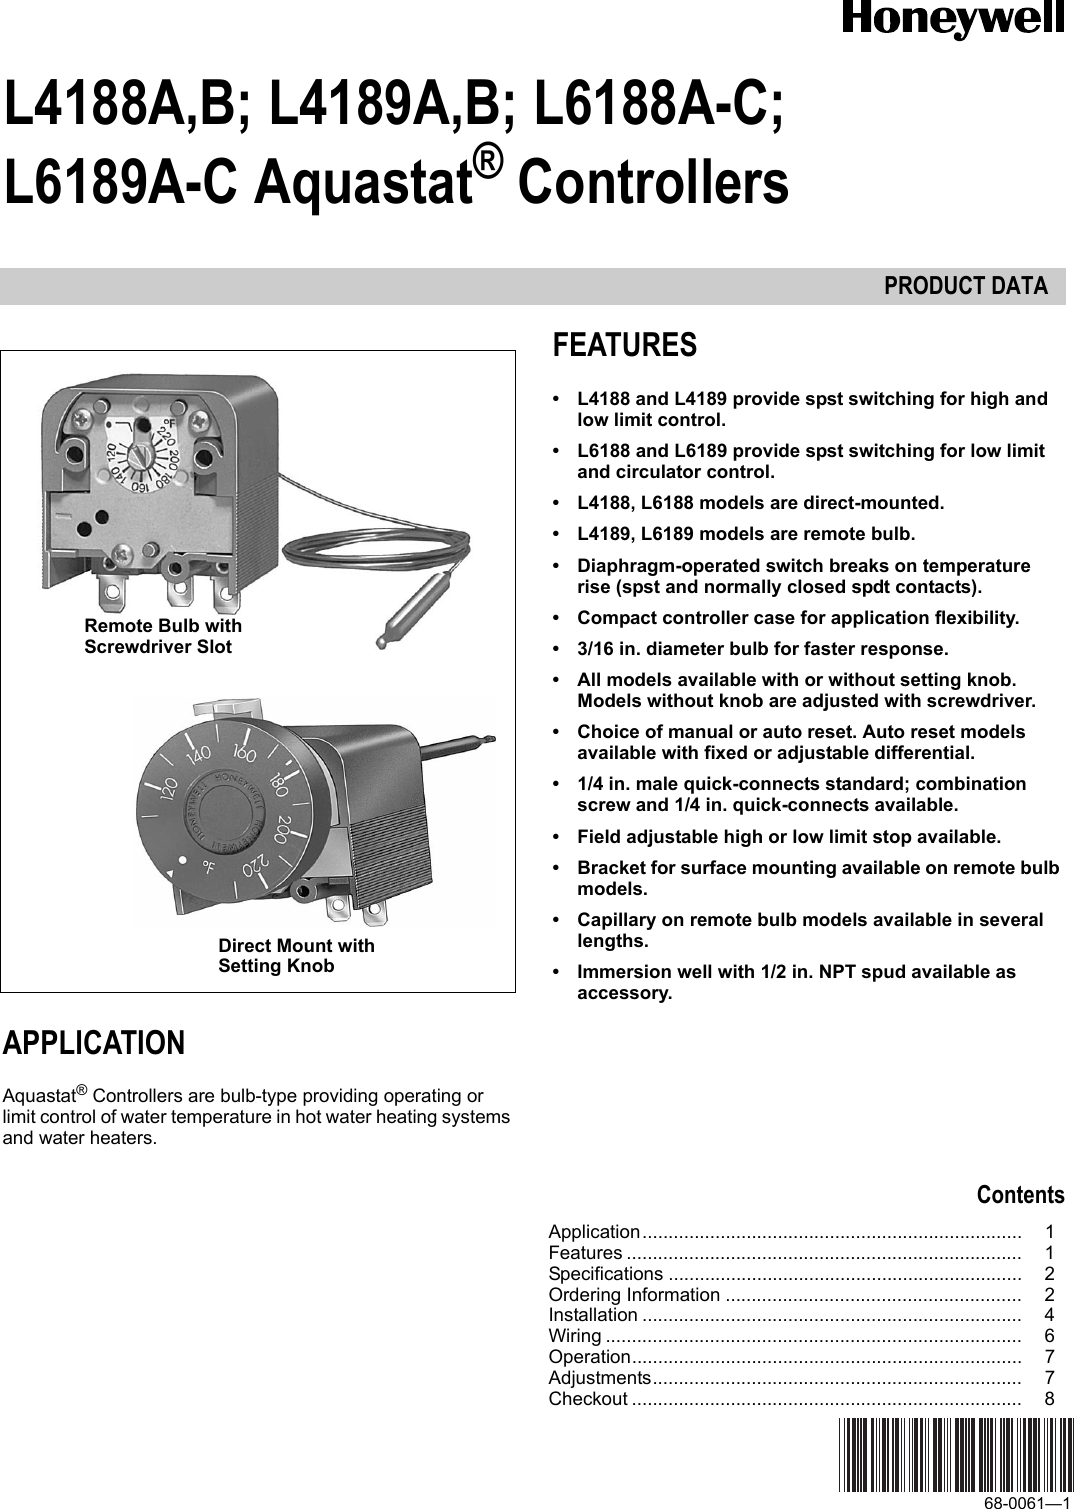 Page 1 of 8 - Honeywell Honeywell-Aquastat-L6188A-C-Users-Manual- 68-0061-1 - L4188A,B; L4189A,B; L6188A-C; L6189A-C Aquastat® Controllers  Honeywell-aquastat-l6188a-c-users-manual